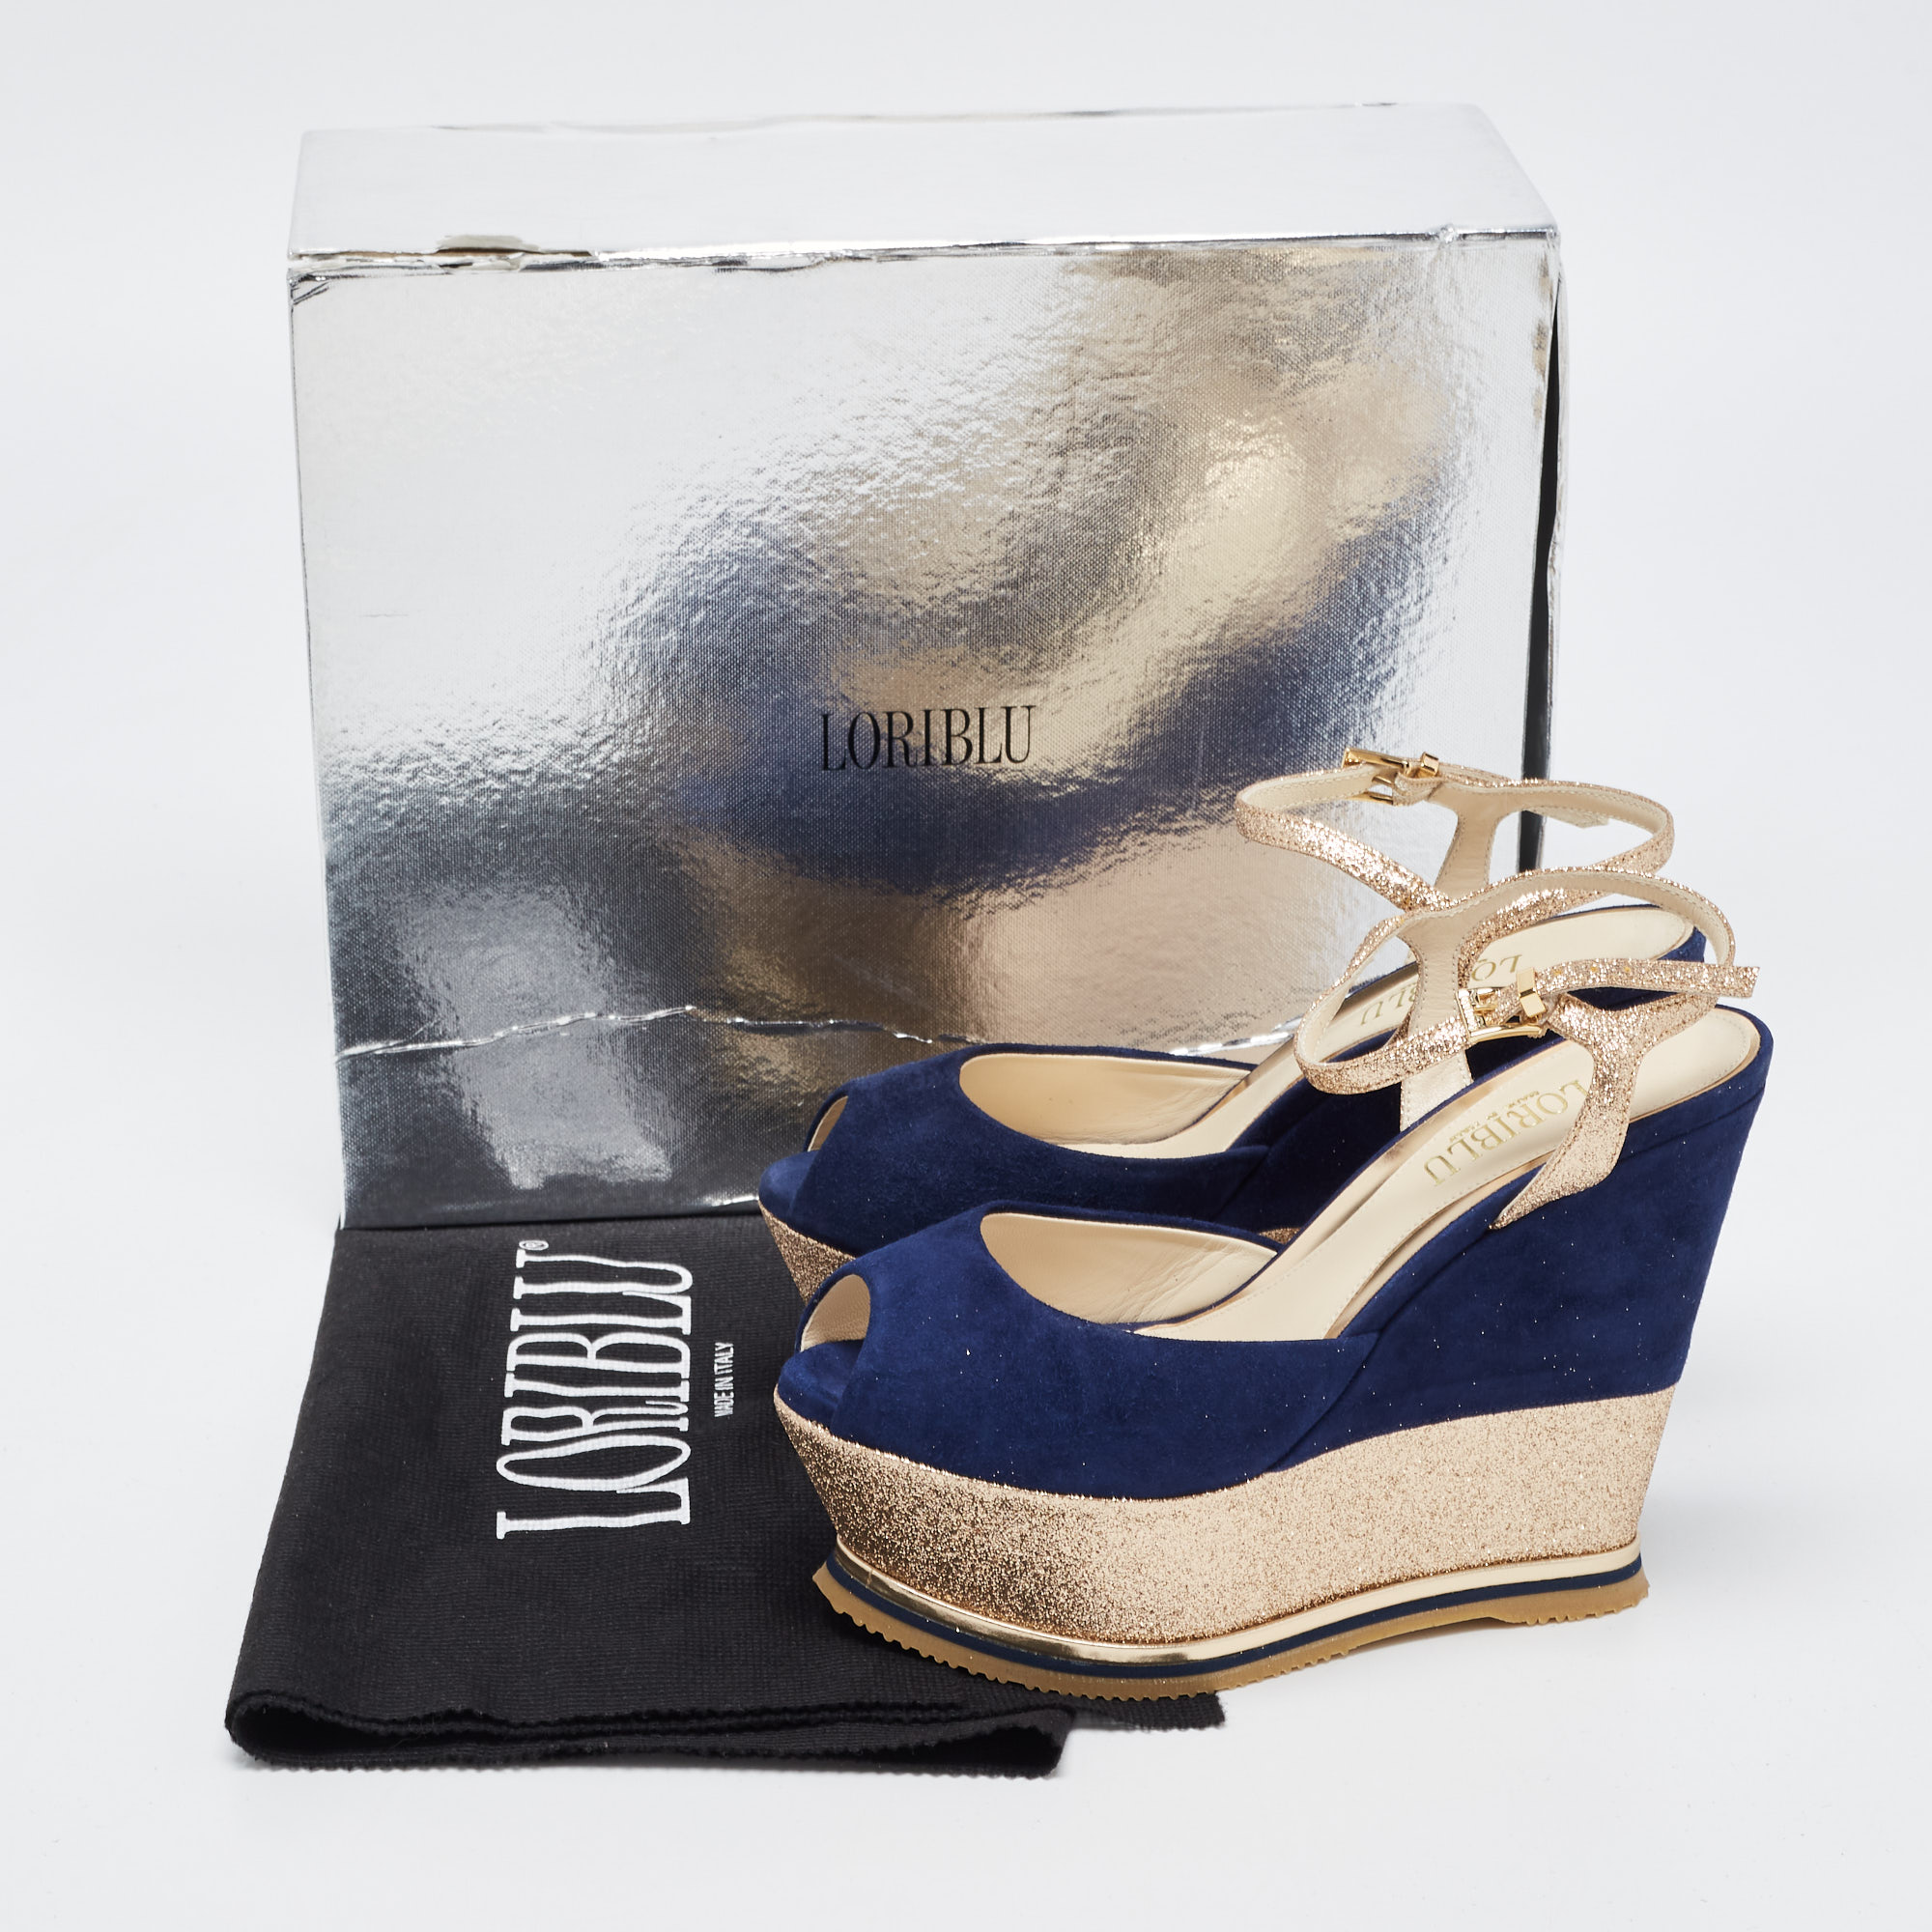 Loriblu Navy Blue /Gold Suede And Glitter Wedge Platform Ankle Strap Sandals Size 37.5